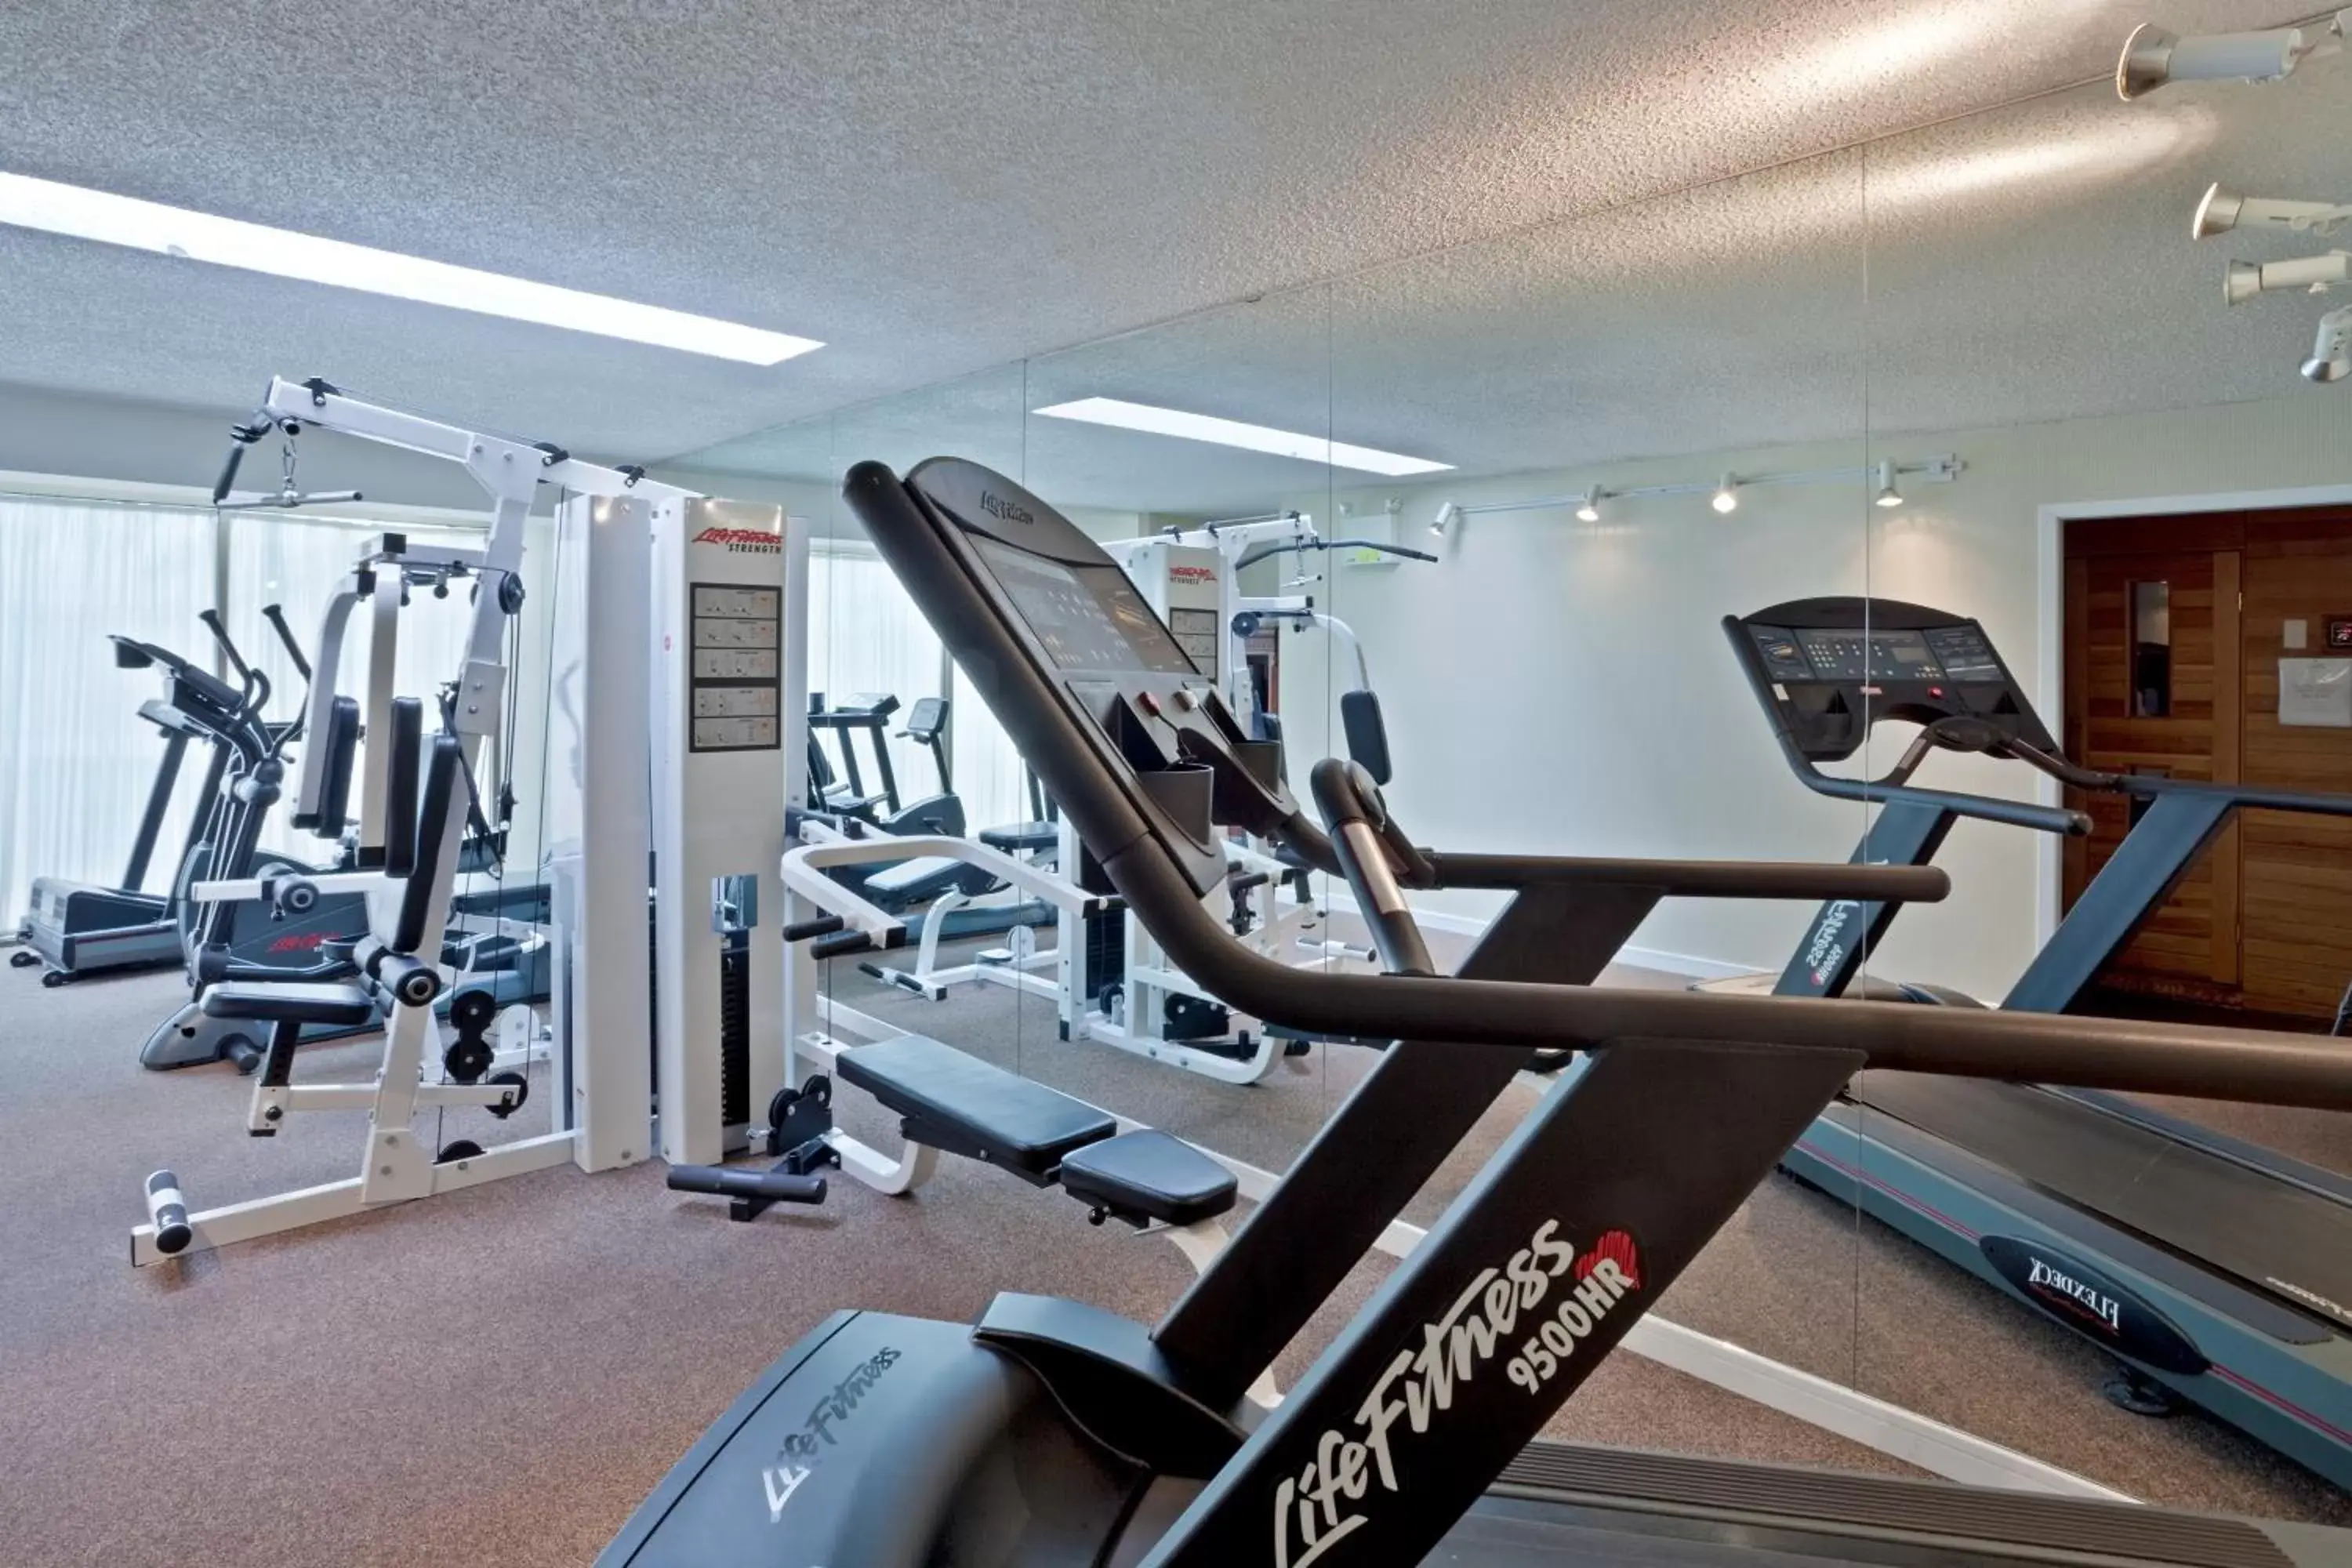 Fitness centre/facilities, Fitness Center/Facilities in Atrium Inn Vancouver